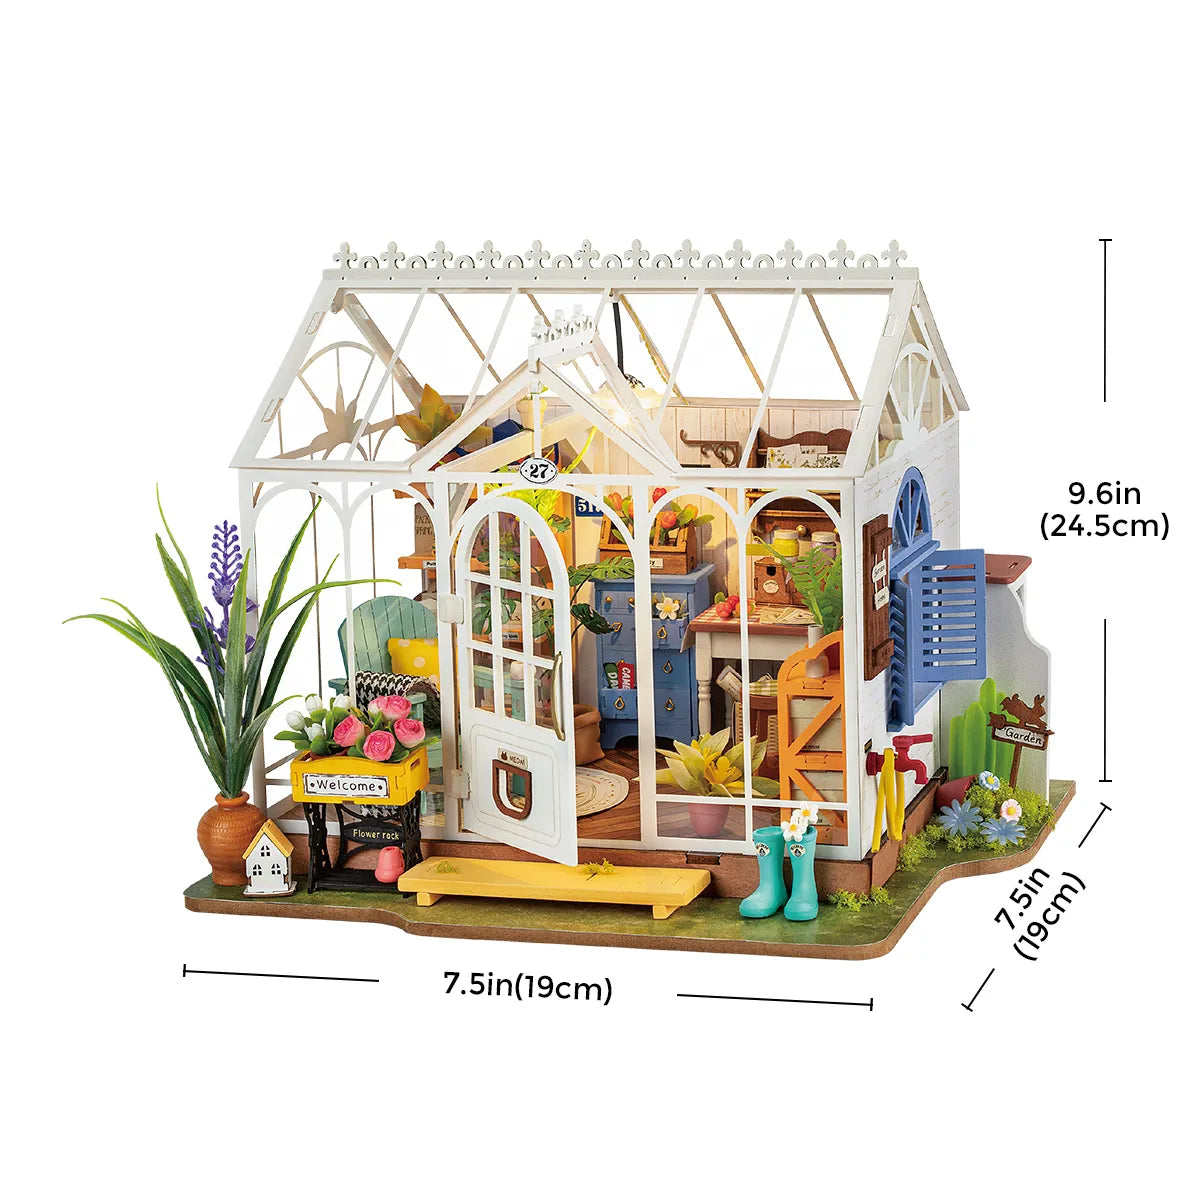 DG163 Rolife Dreamy Garden House DIY Miniature House Kit